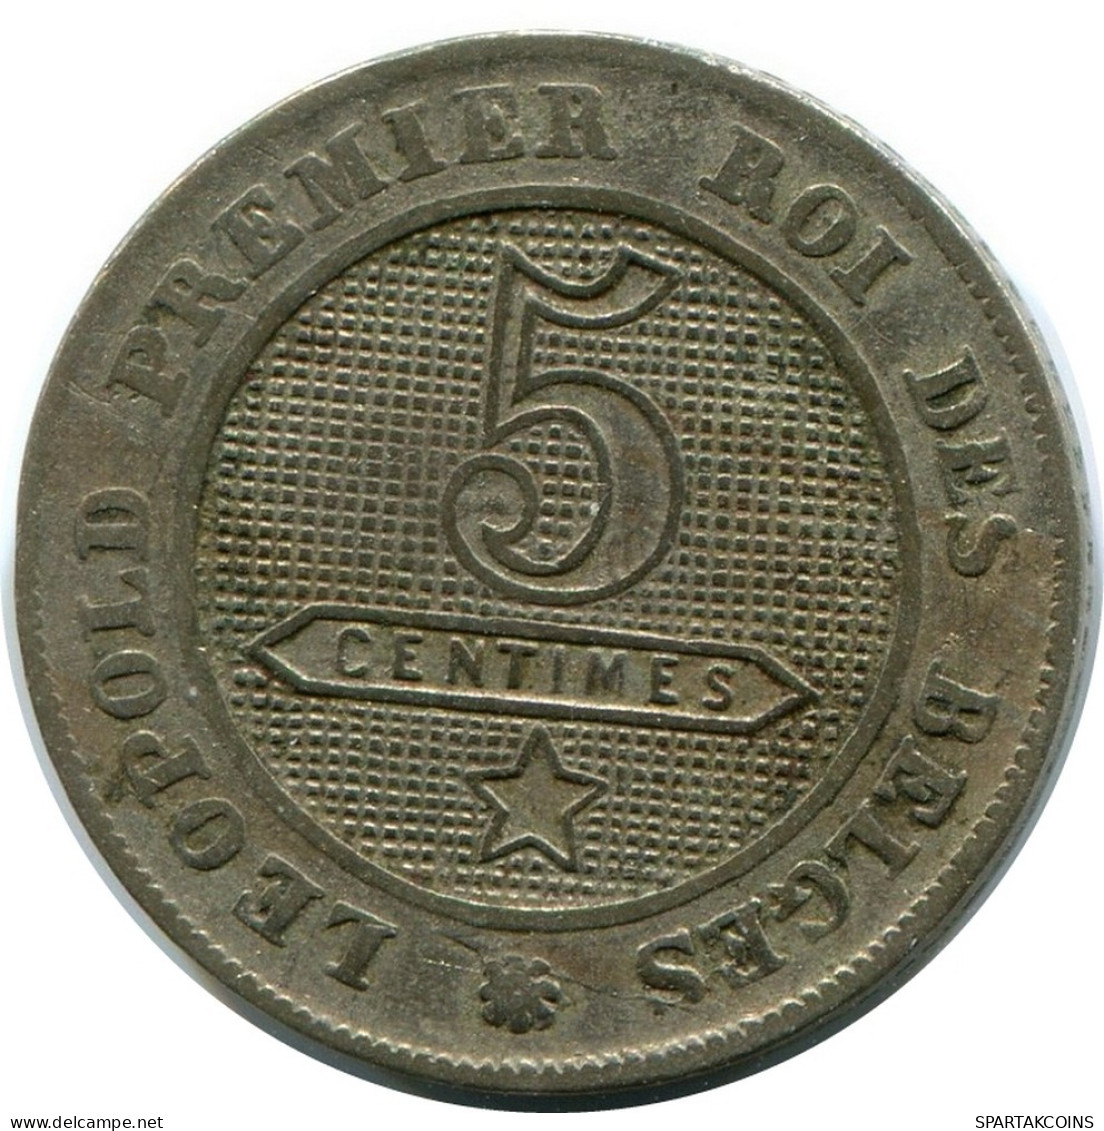 5 CENTIMES 1862 BELGIUM Coin #AX362.U - 5 Centimes